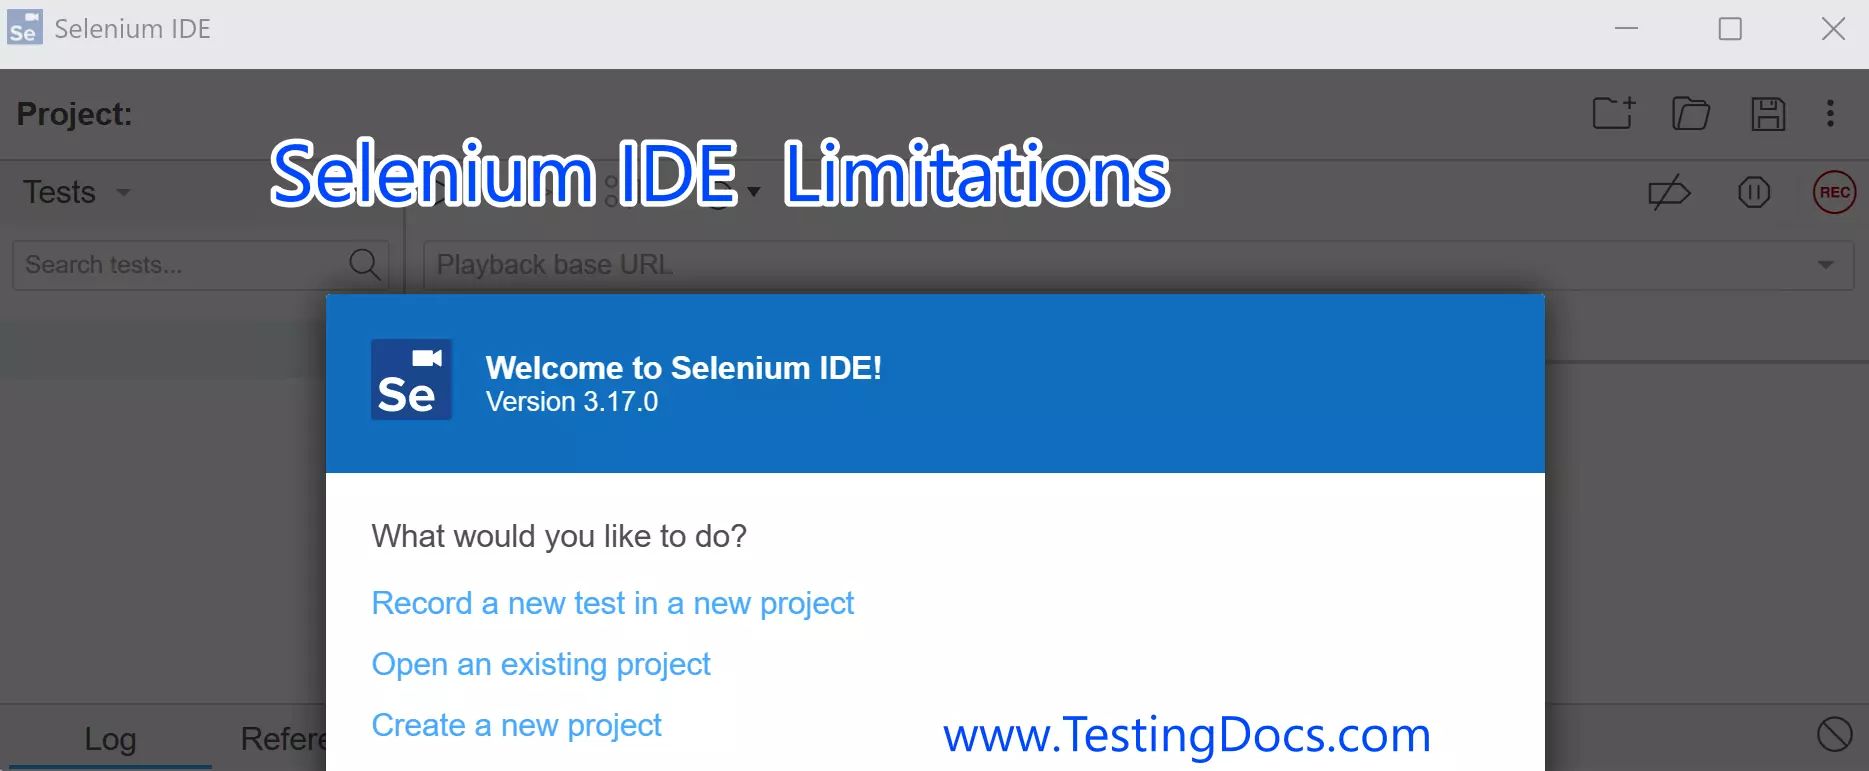 Selenium IDE limitations